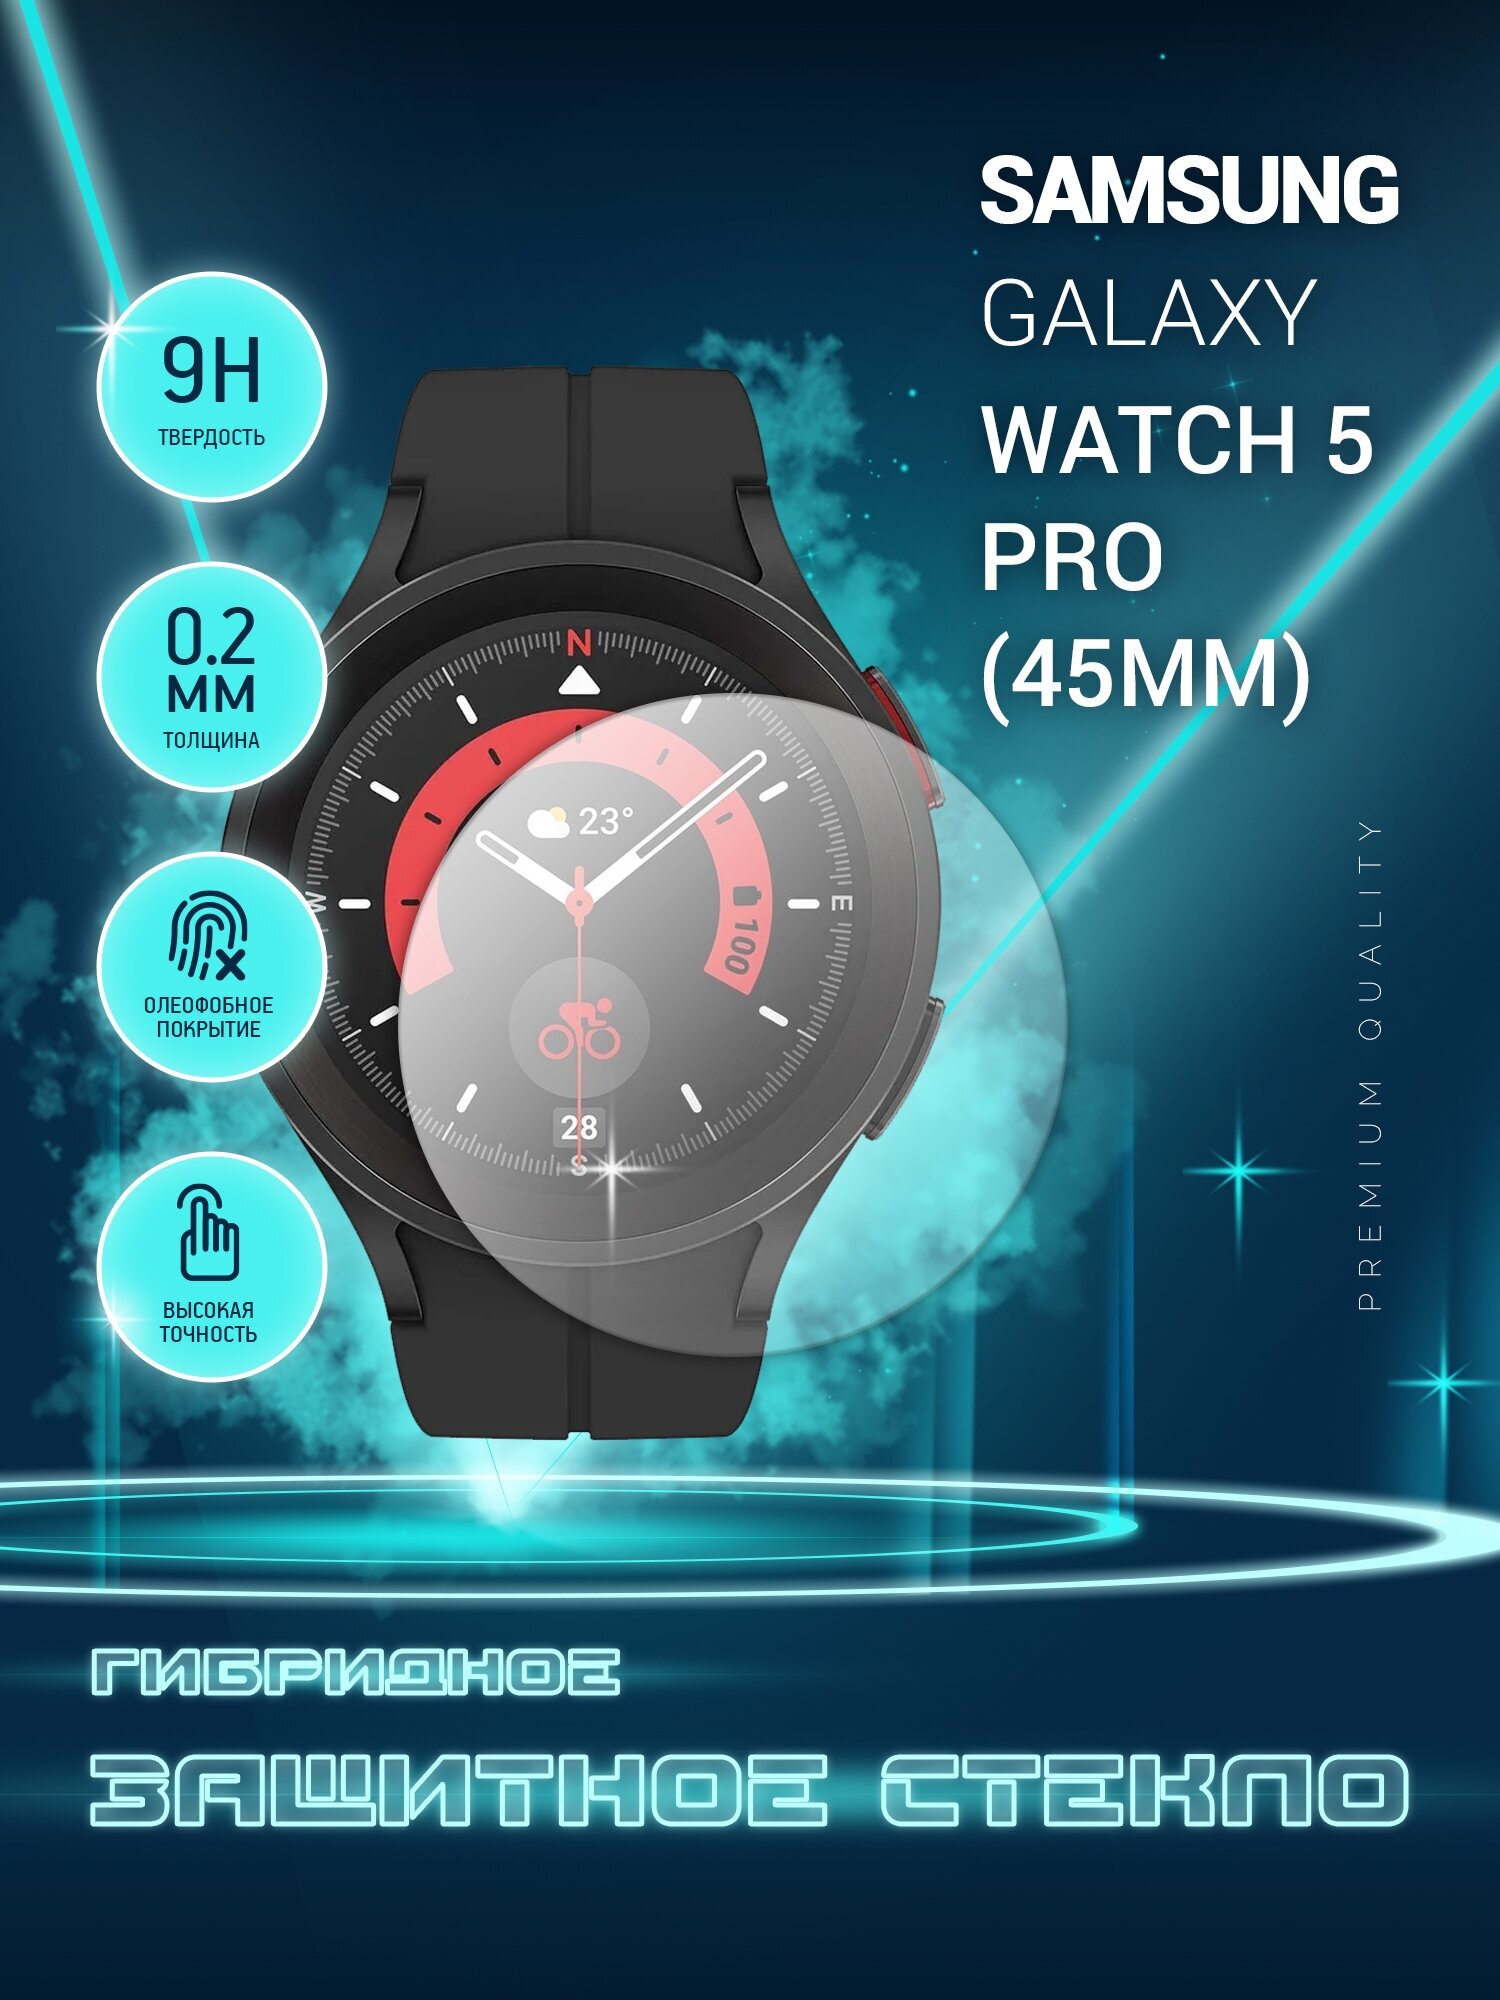 Защитное стекло на часы Samsung Galaxy Watch 5 Pro (45mm) Самсунг Галакси Вотч 5 Про 45 мм гибридное (пленка + стекловолокно) Crystal boost